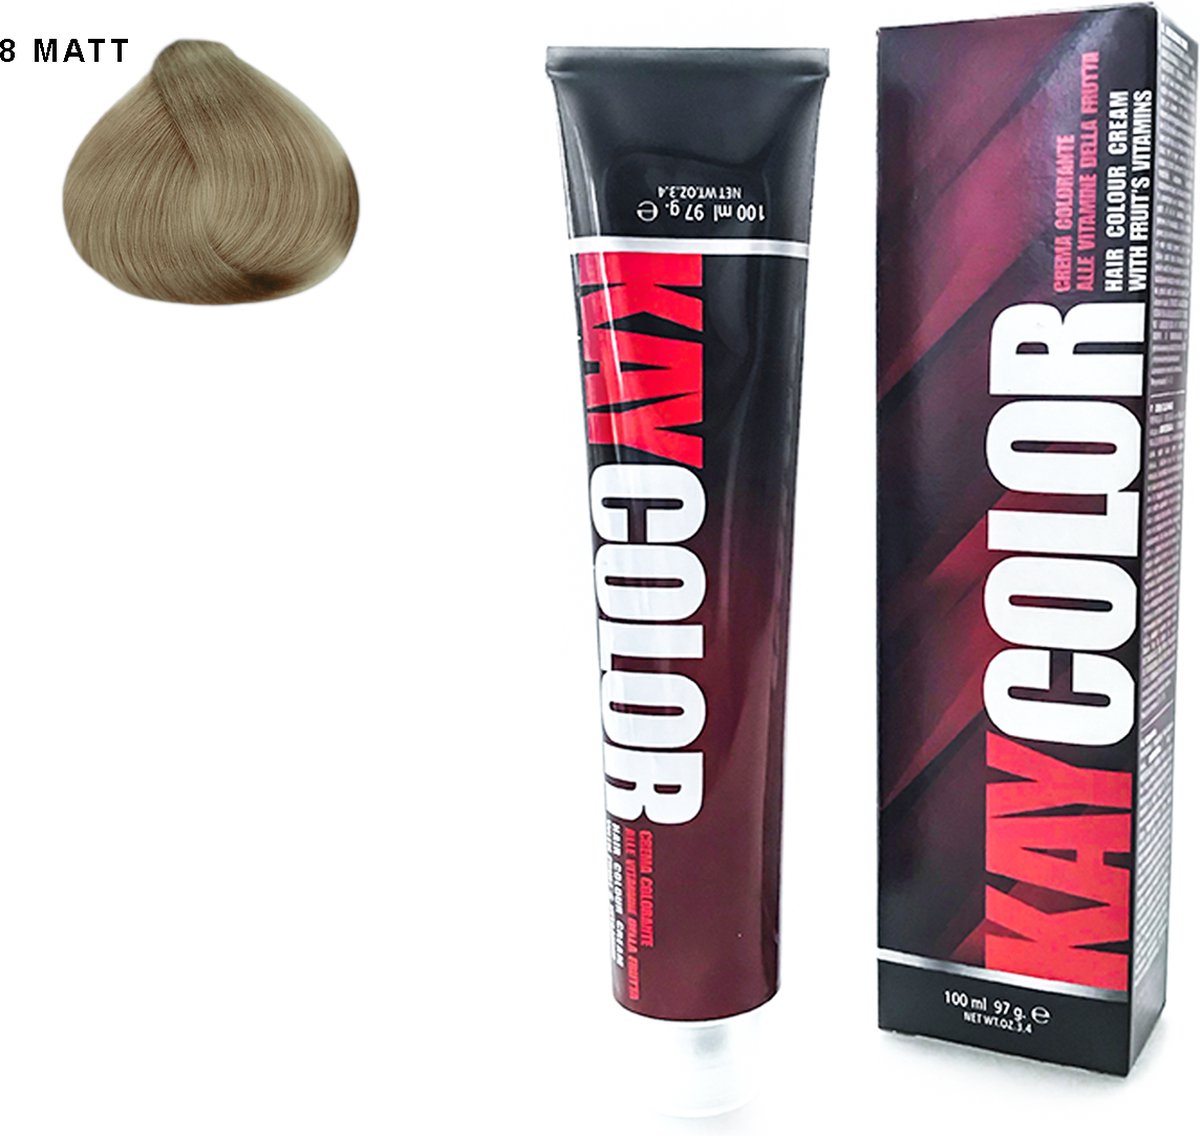 Kay Color - Kay Color Hair Color Cream 100 ml - Matt 8 Blonde